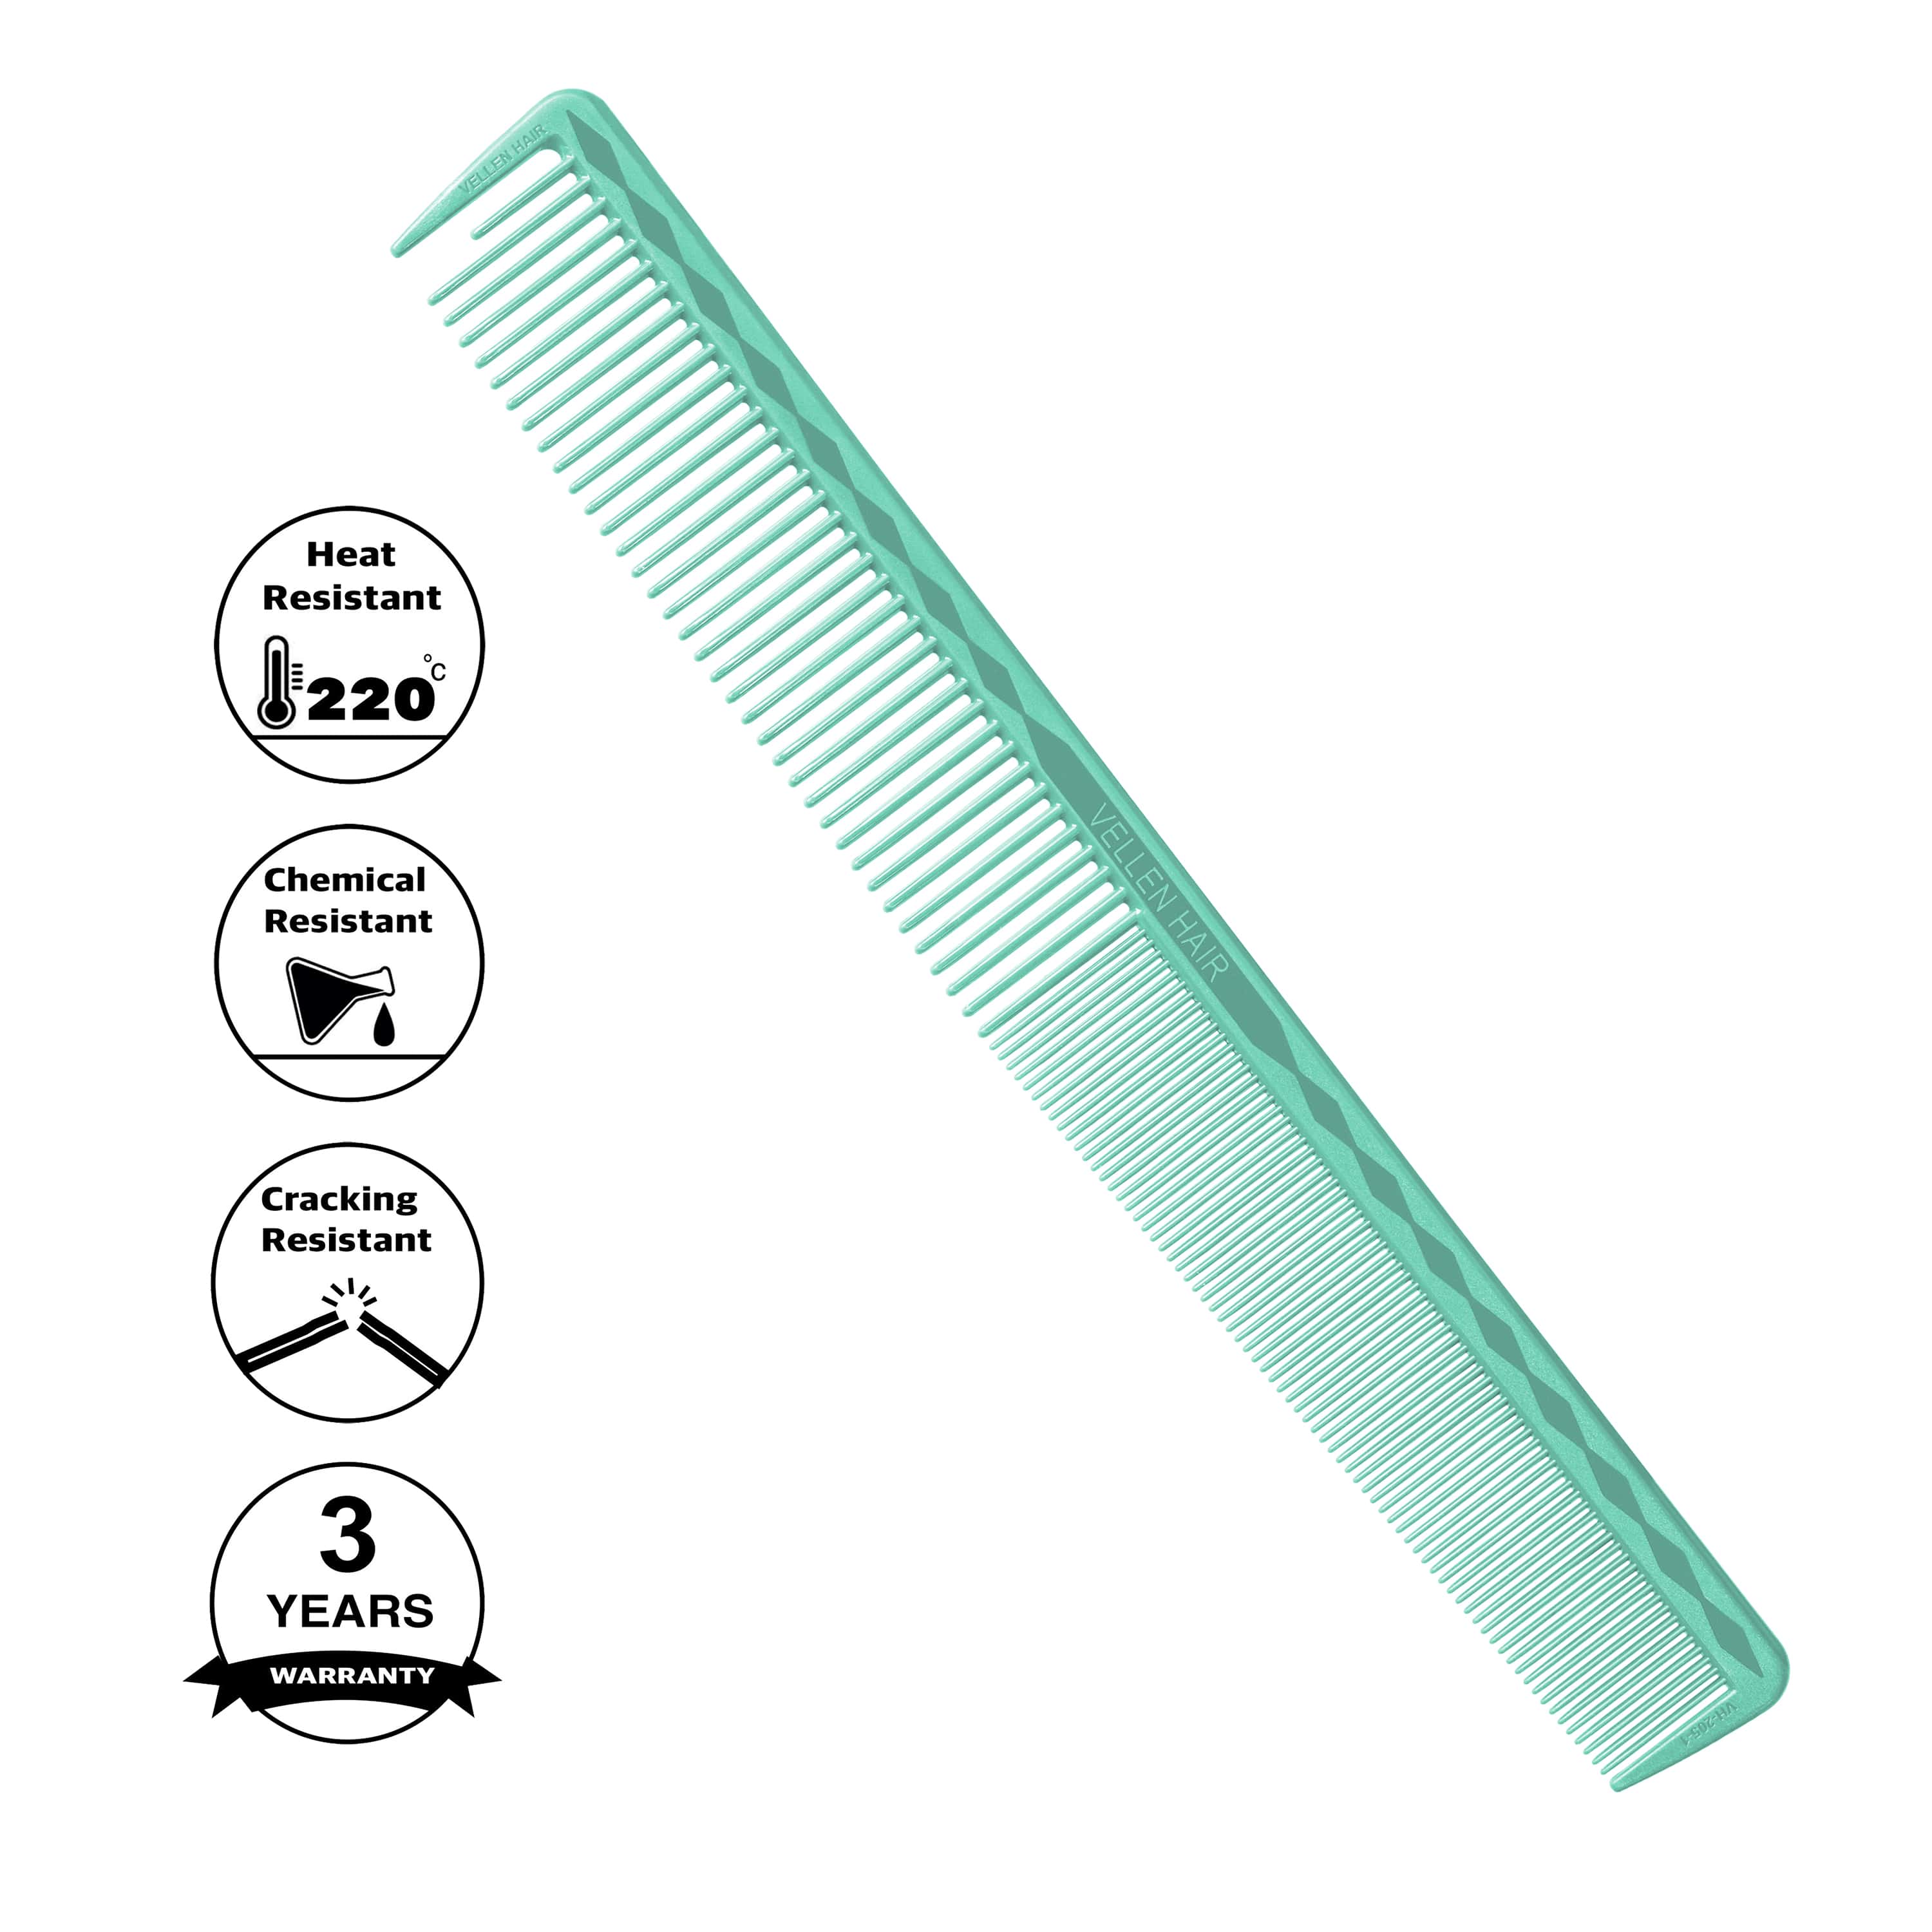 Vellen Hair® Ultimate Cutting Comb - VH205 - 21.4 cm / 8.42 inch - Mint